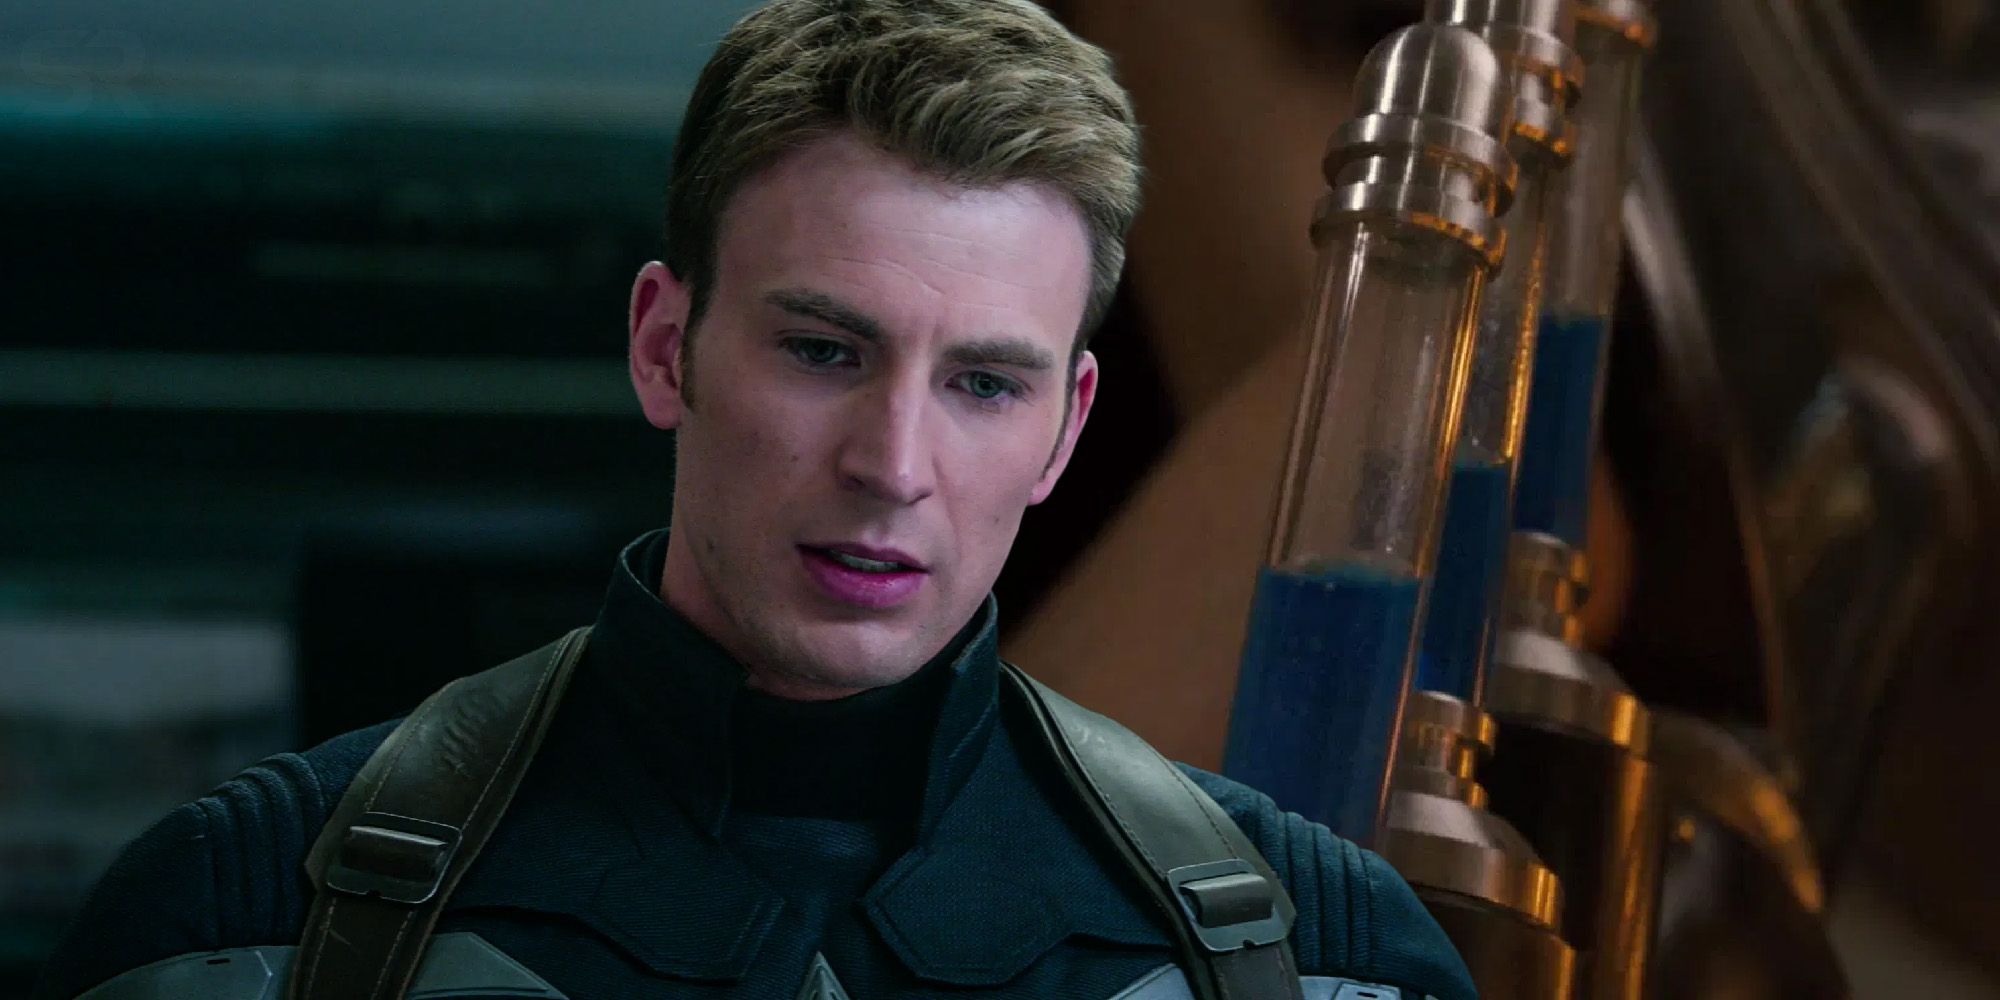 Marvel Explains How Captain America's Super-Soldier Serum Works